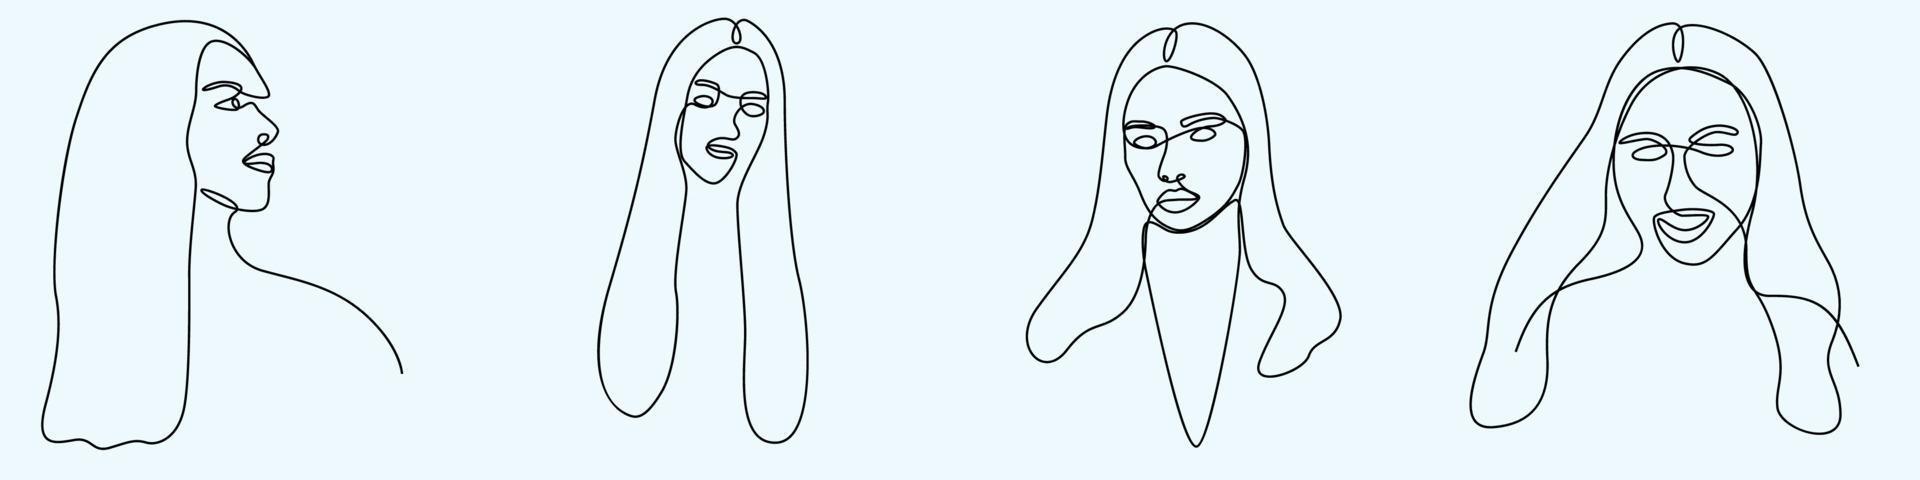 kontinuerlig ett linje hand teckning av kvinna ansikte linje konst feminin vektor